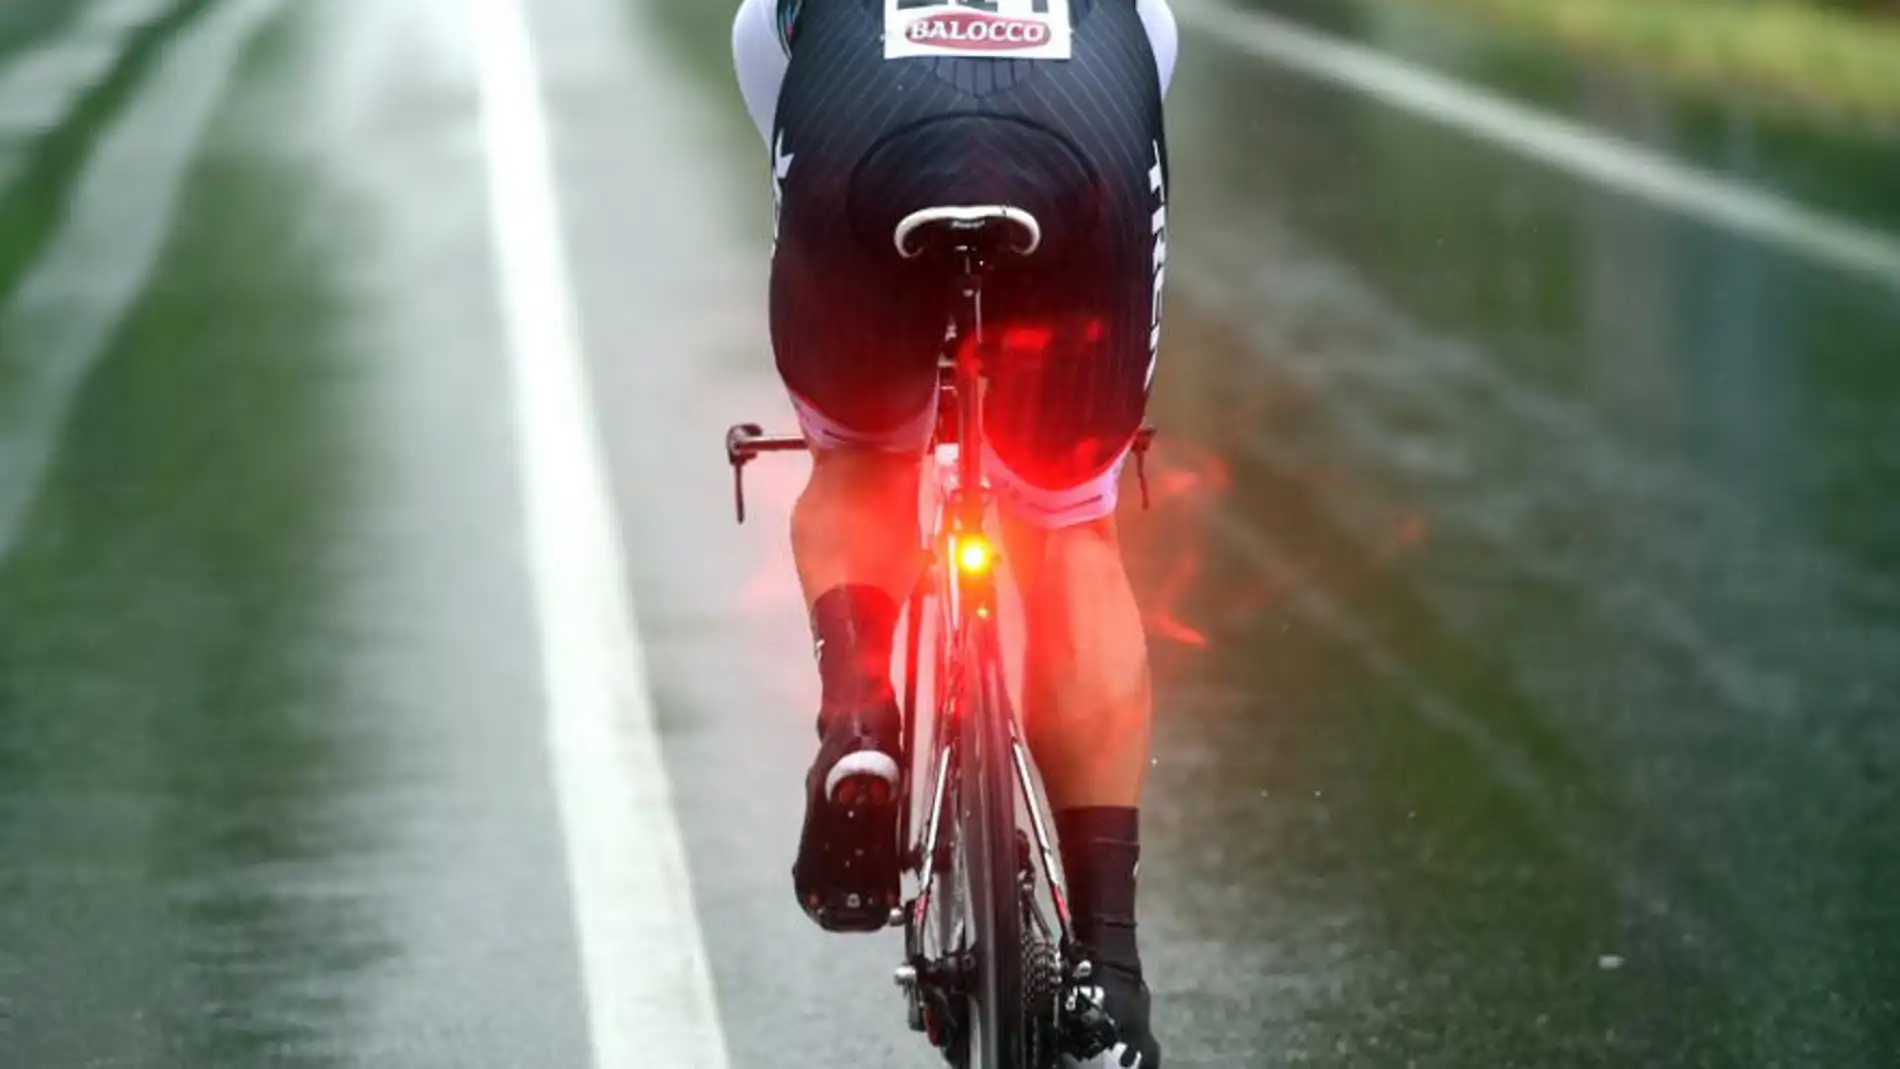 Usar luces parpadeantes en tu bici es motivo de multa: la última polémica  de la DGT